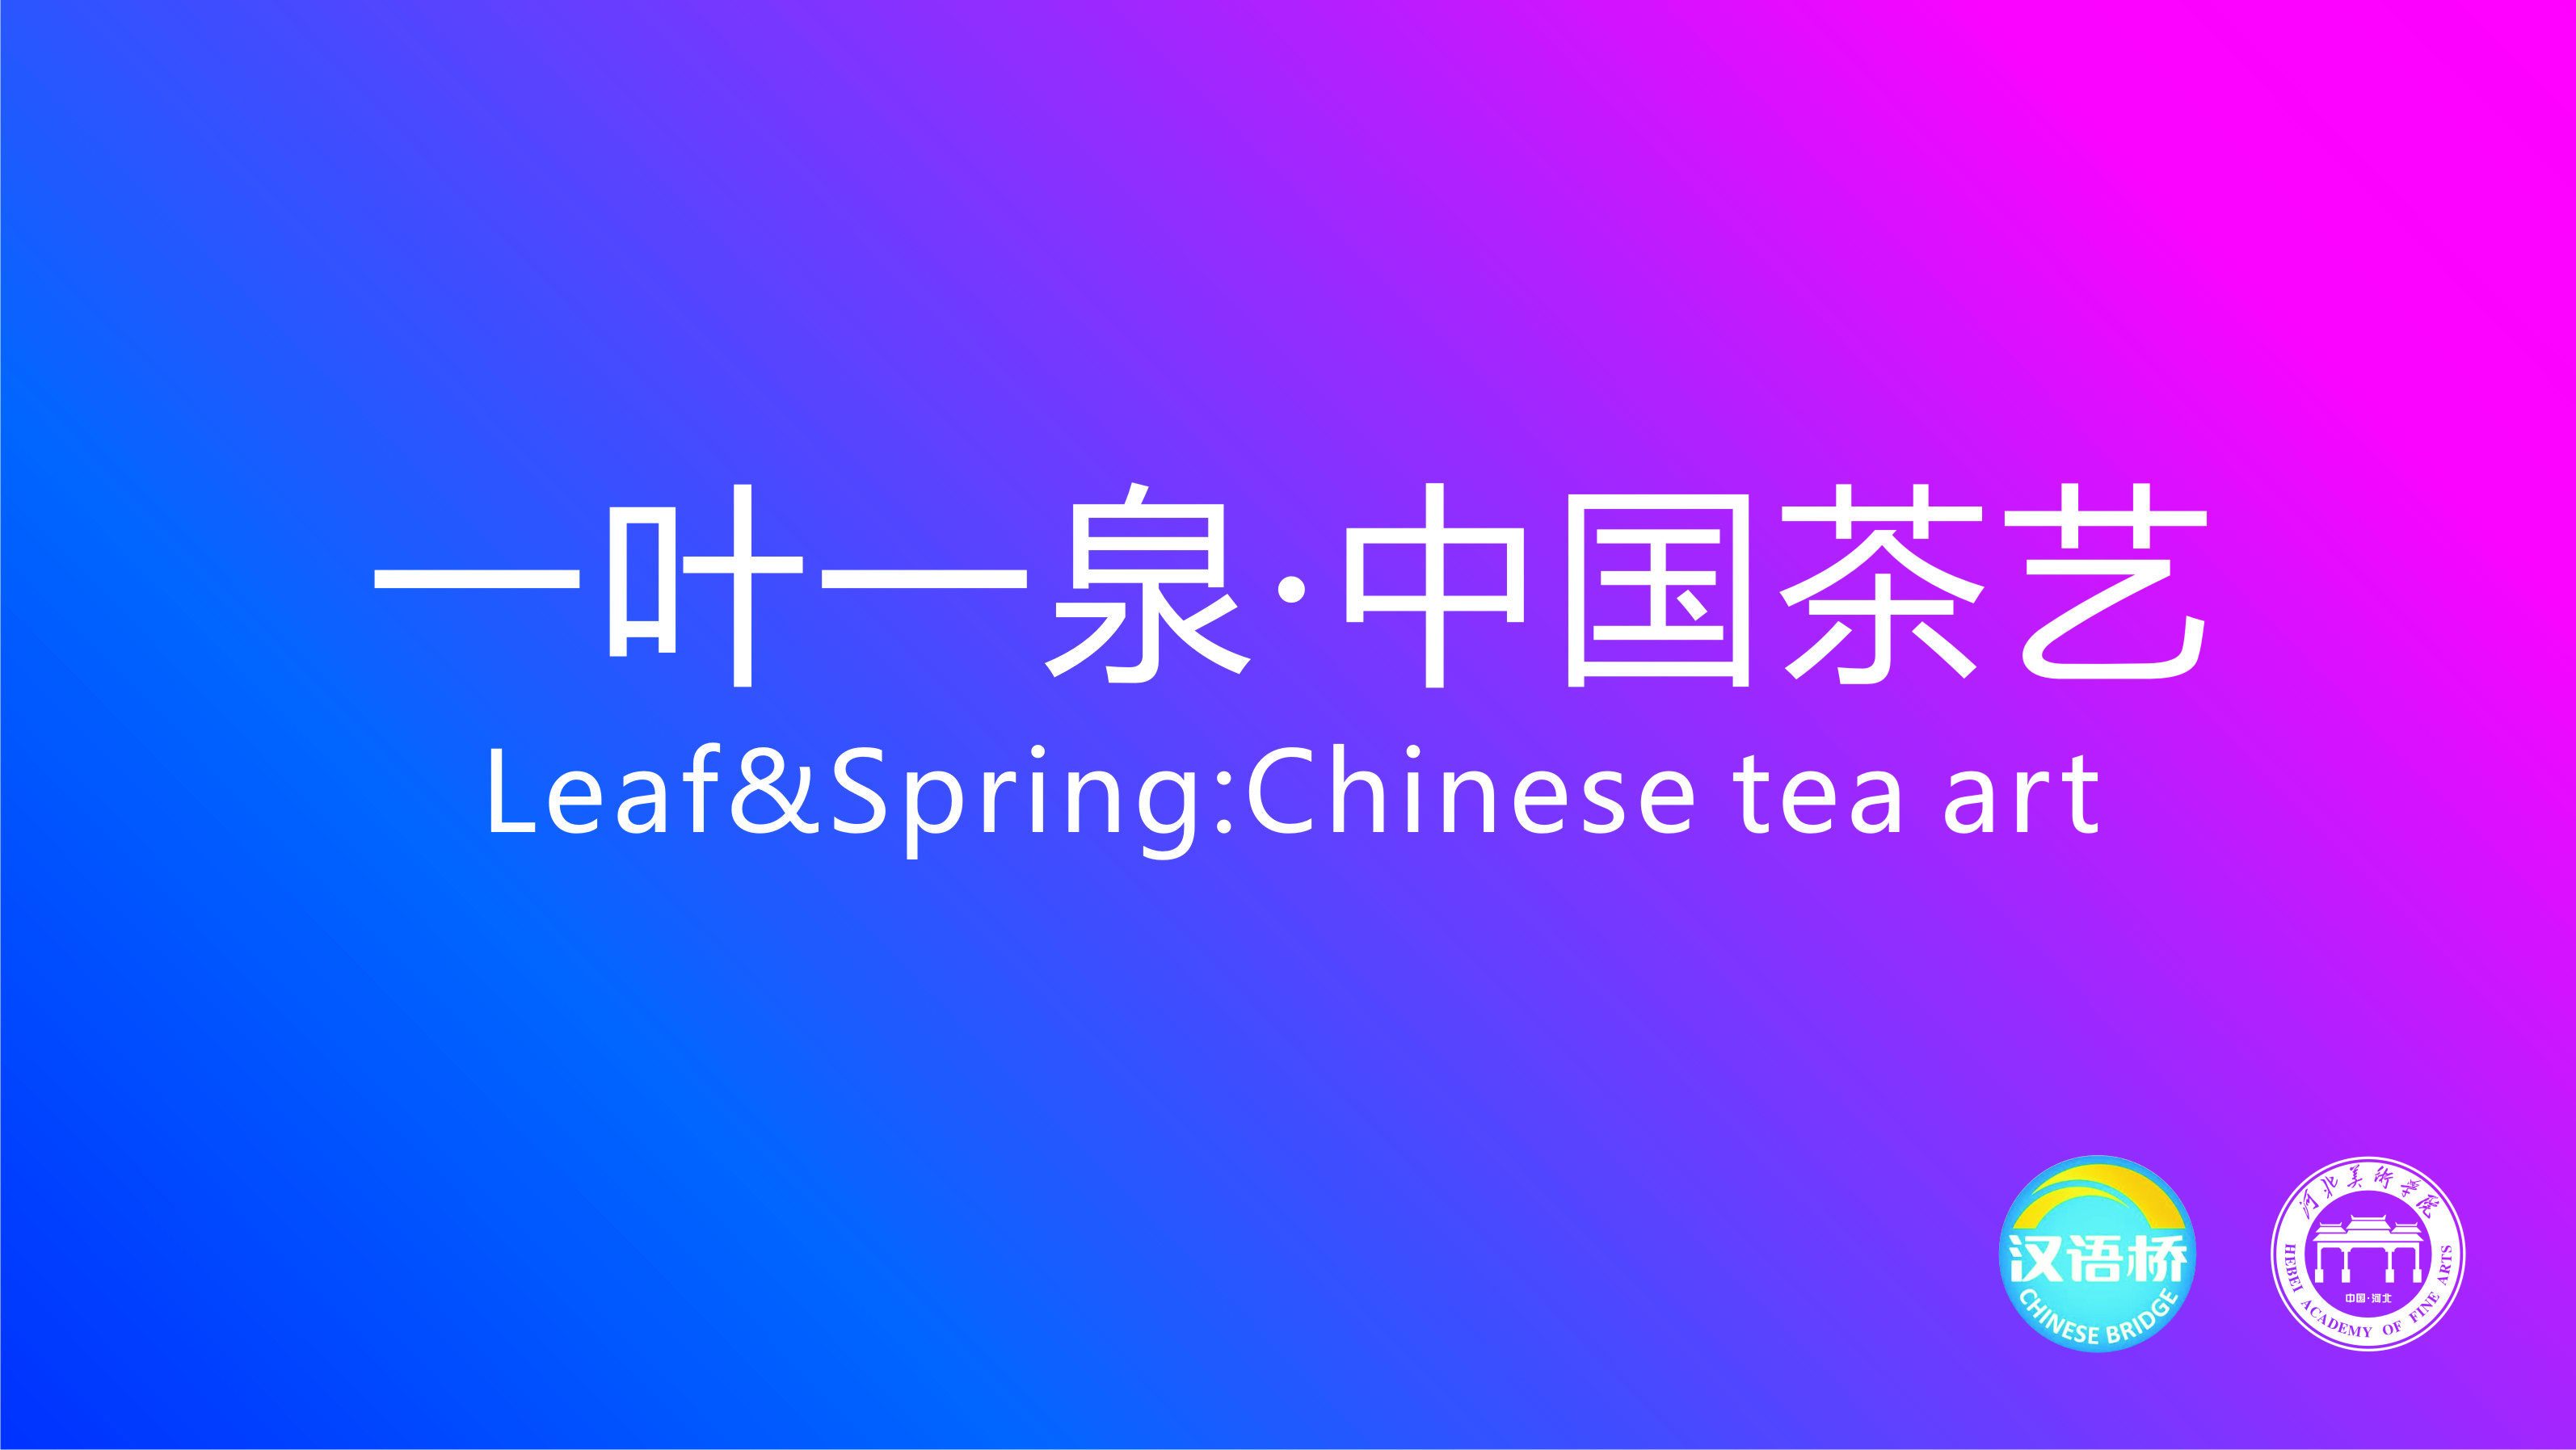 Leaf&Spring:Chinese tea art